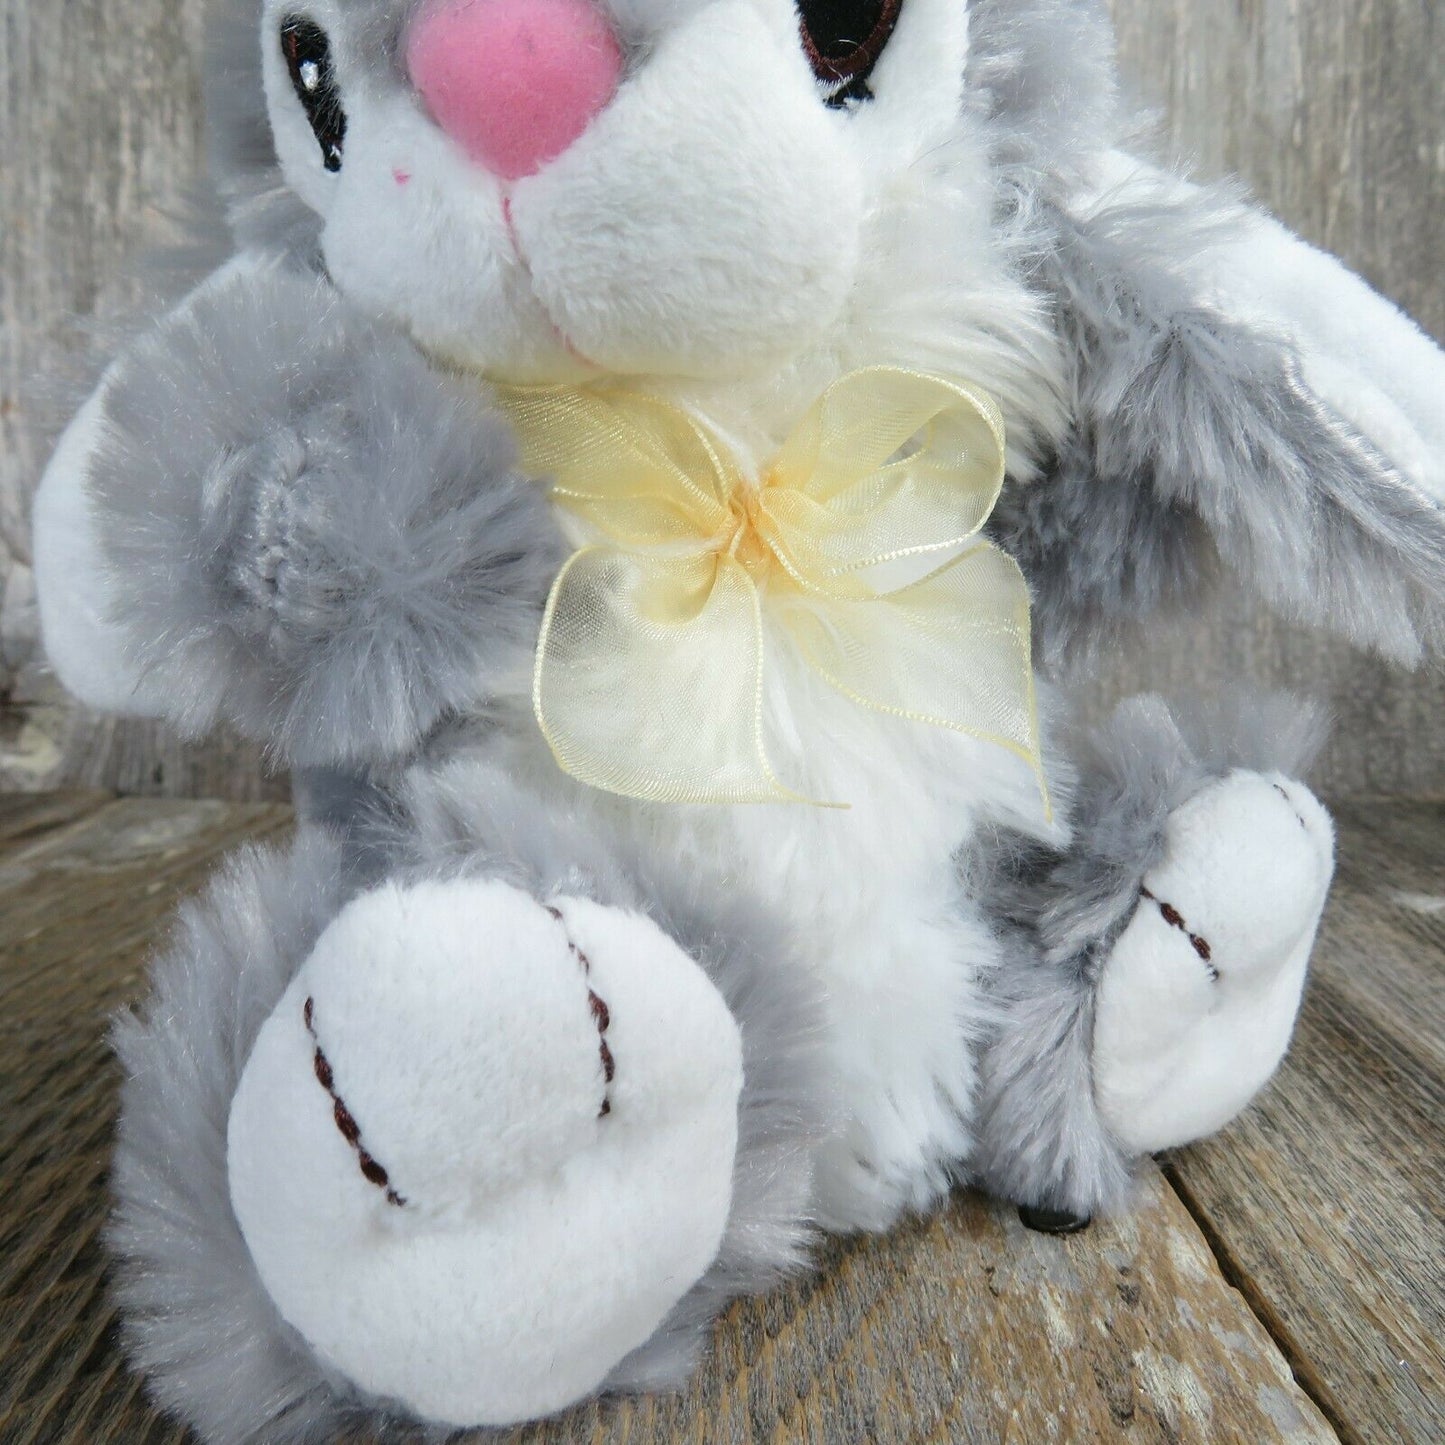 Gray Bunny Rabbit Plush Pink Nose Dan Dee Stuffed Animal Soft Easter Grey 2014